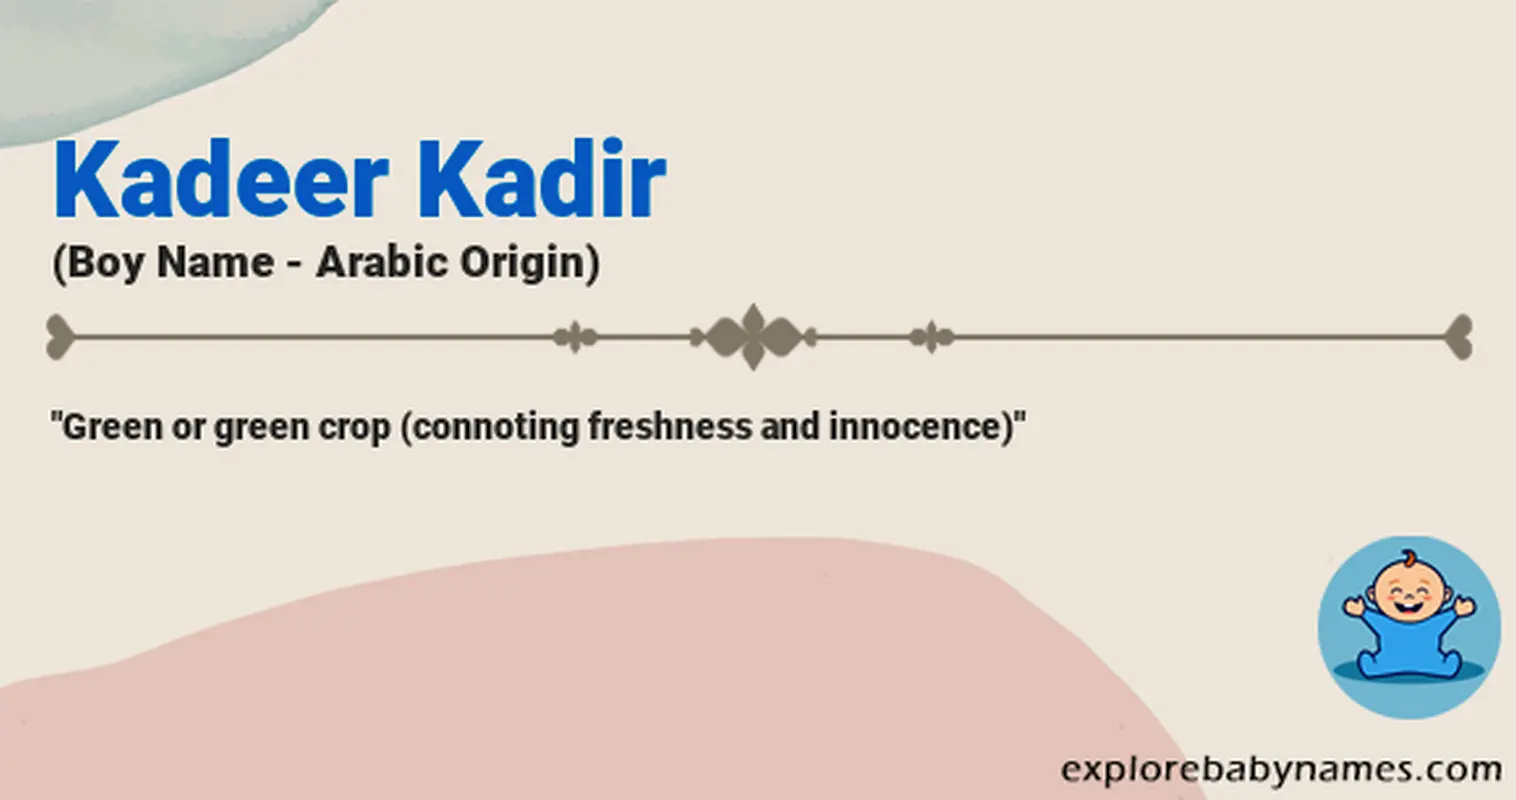 Meaning of Kadeer Kadir